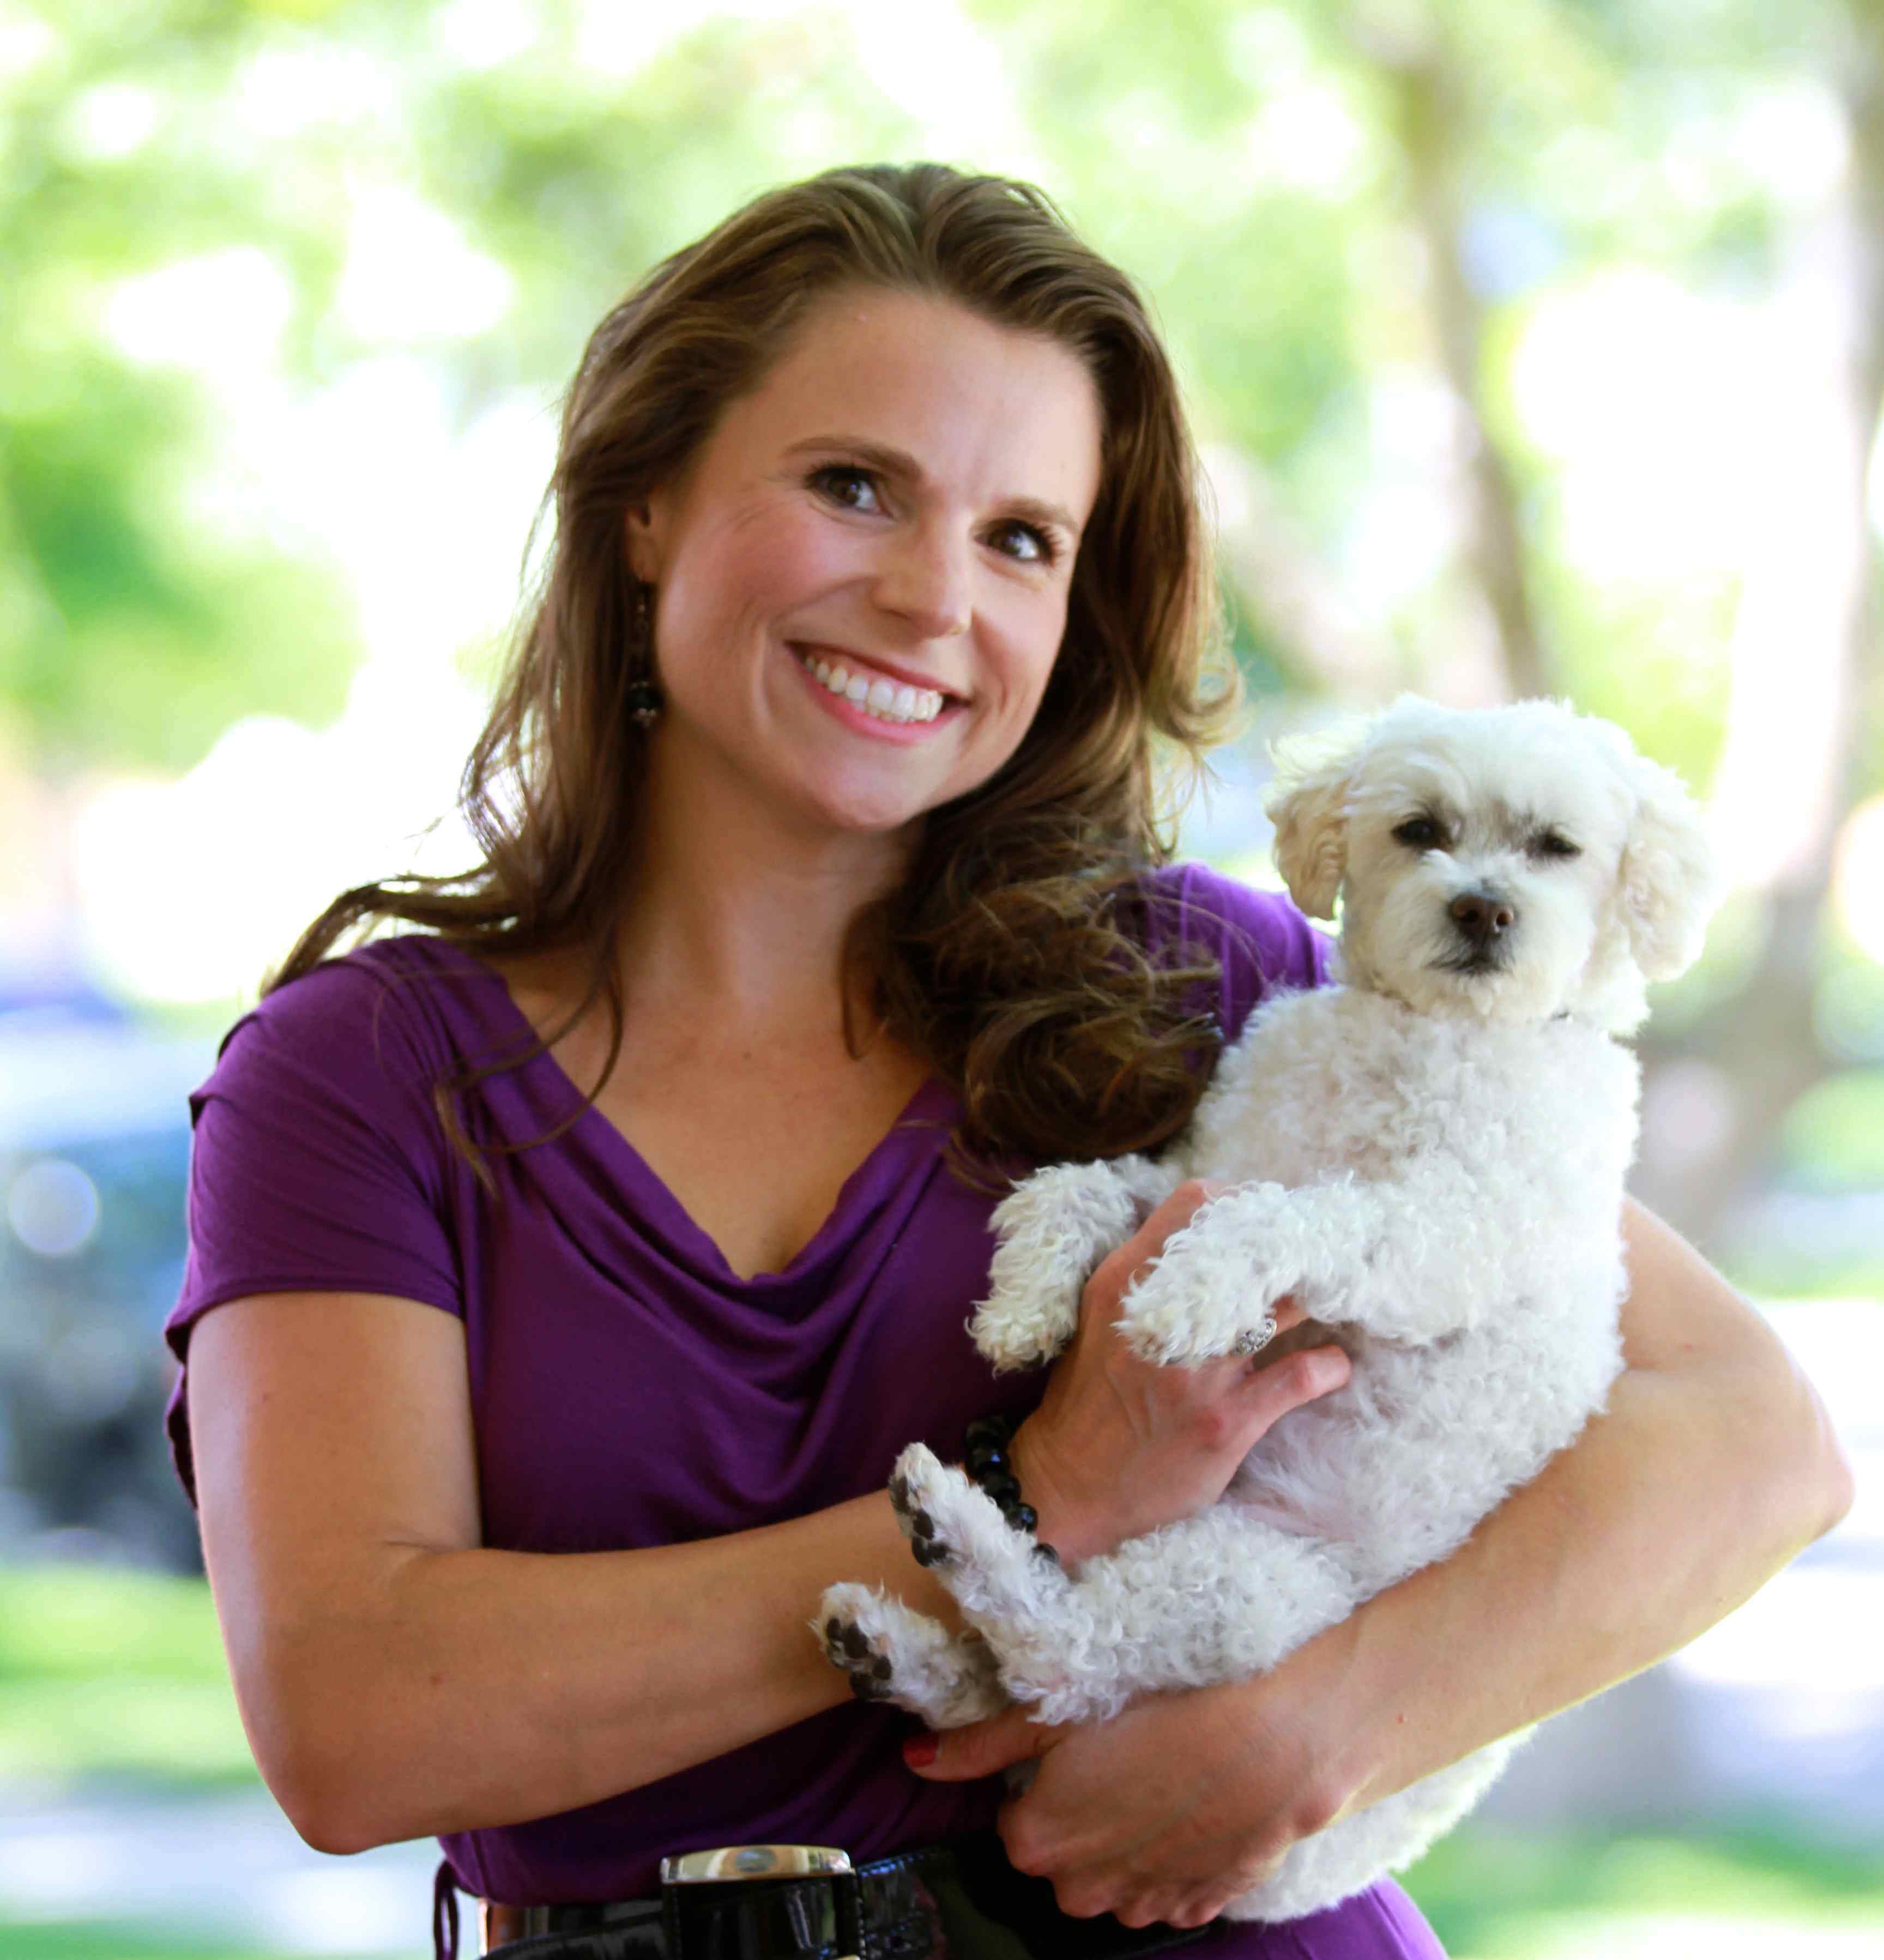 Karen Bostick, Founder & CEO of PetsPage.com